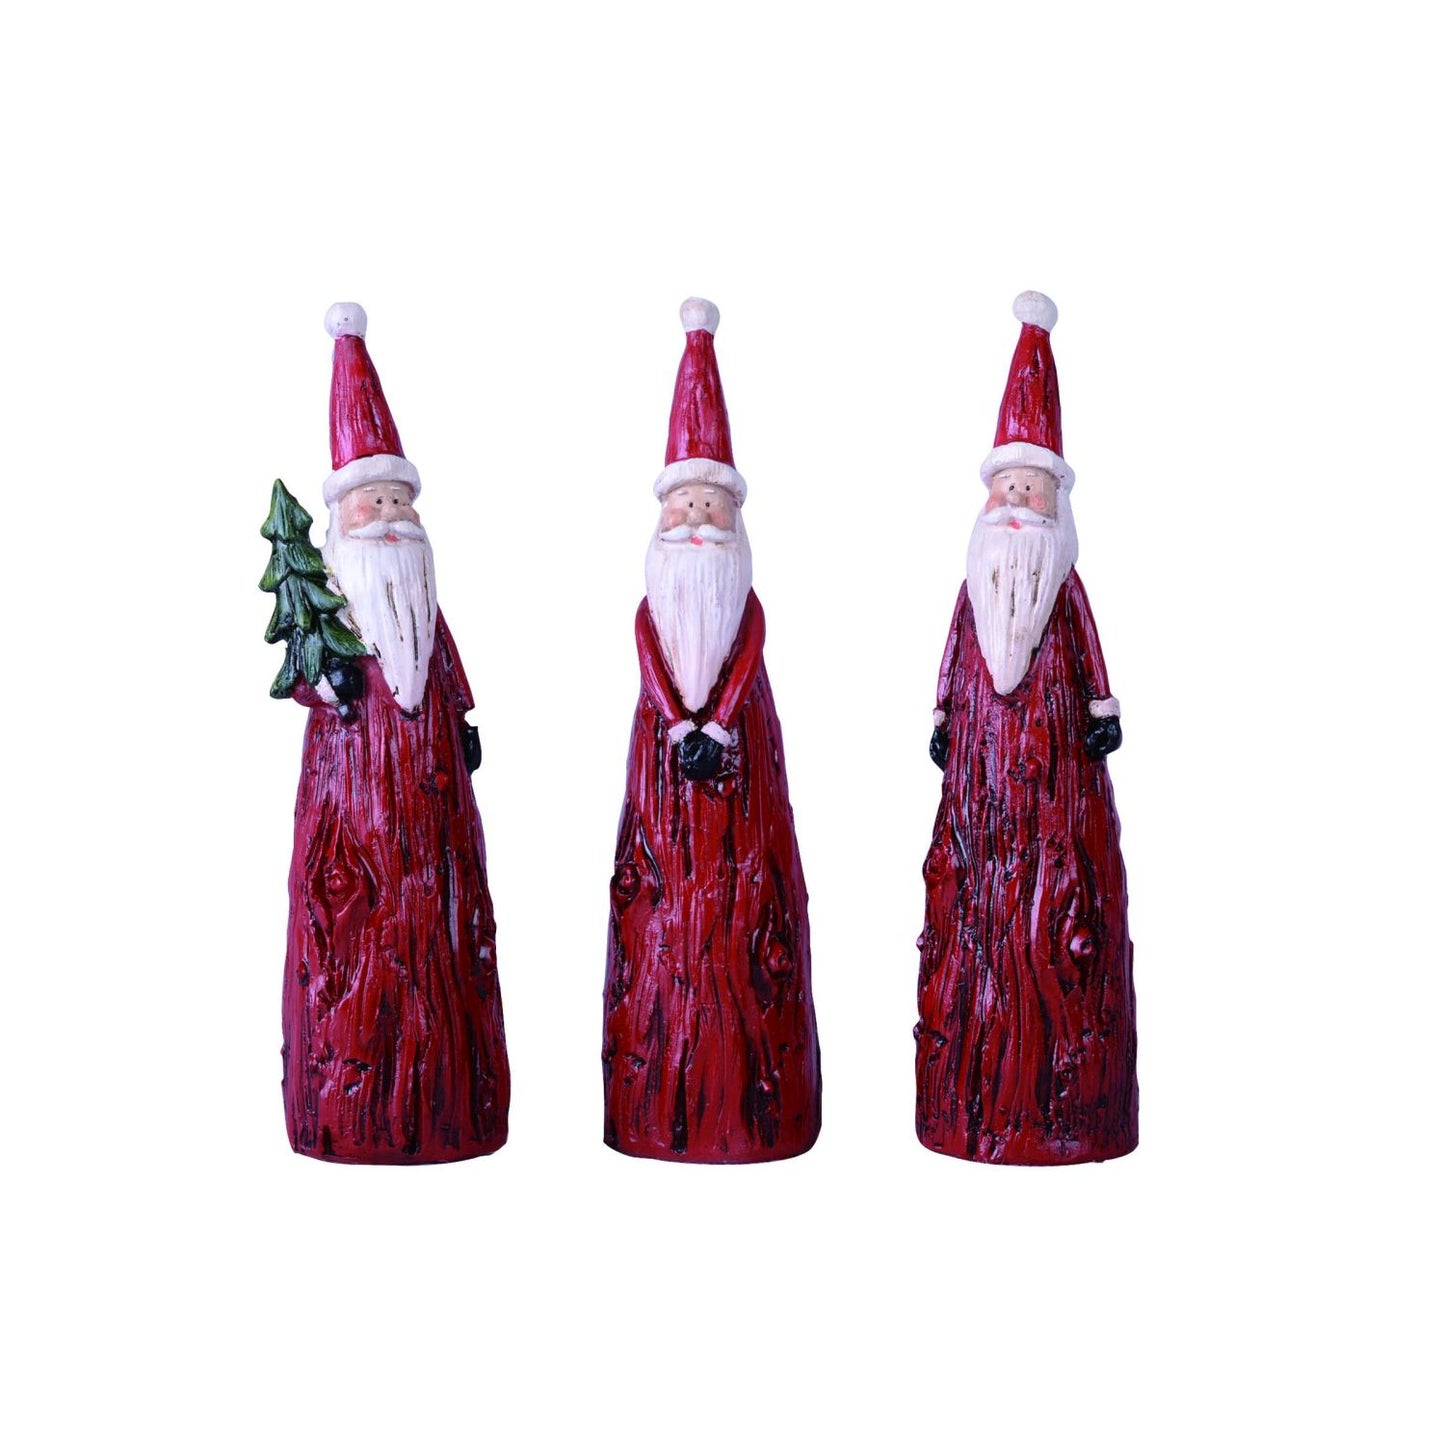 Transpac Small Resin Wood Look Santa Figurine Set Of 3 Assortment